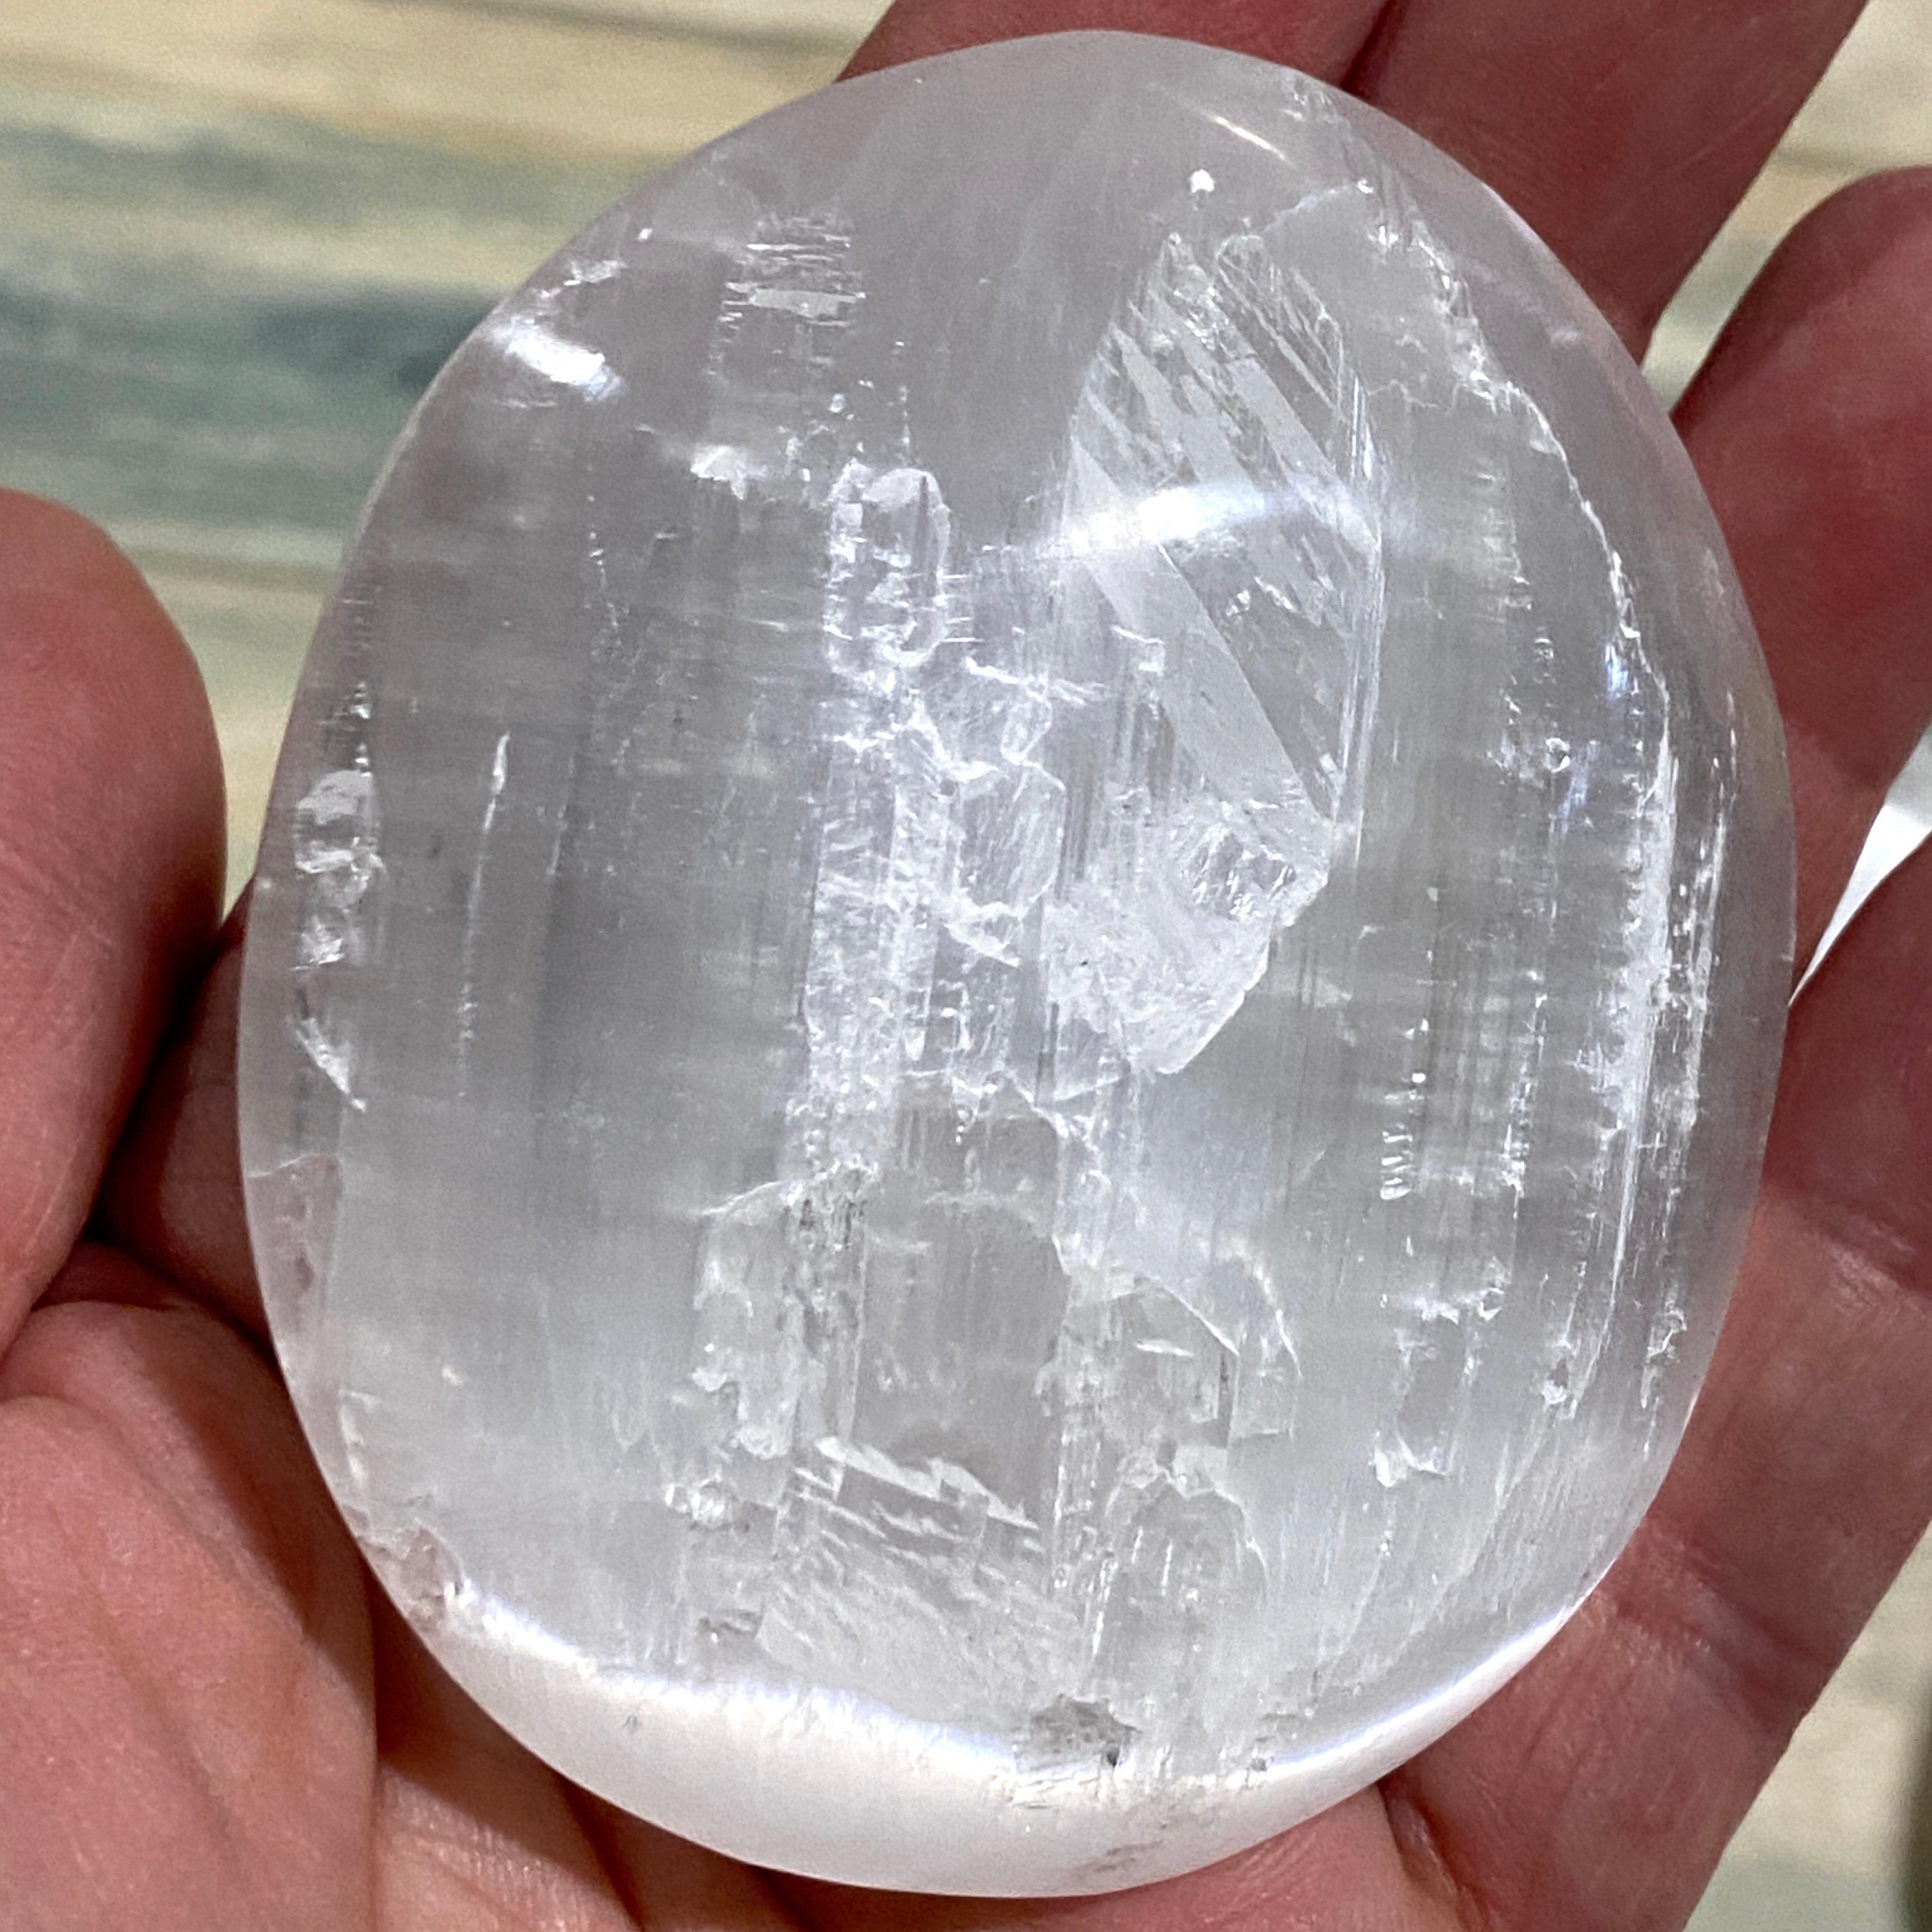 Selenite Palmstone Morocco - Selenite Palm Stone - Crown Chakra Crystal - High Vibration- Cleansing - Energy Healing - 7th Chakra - Reiki